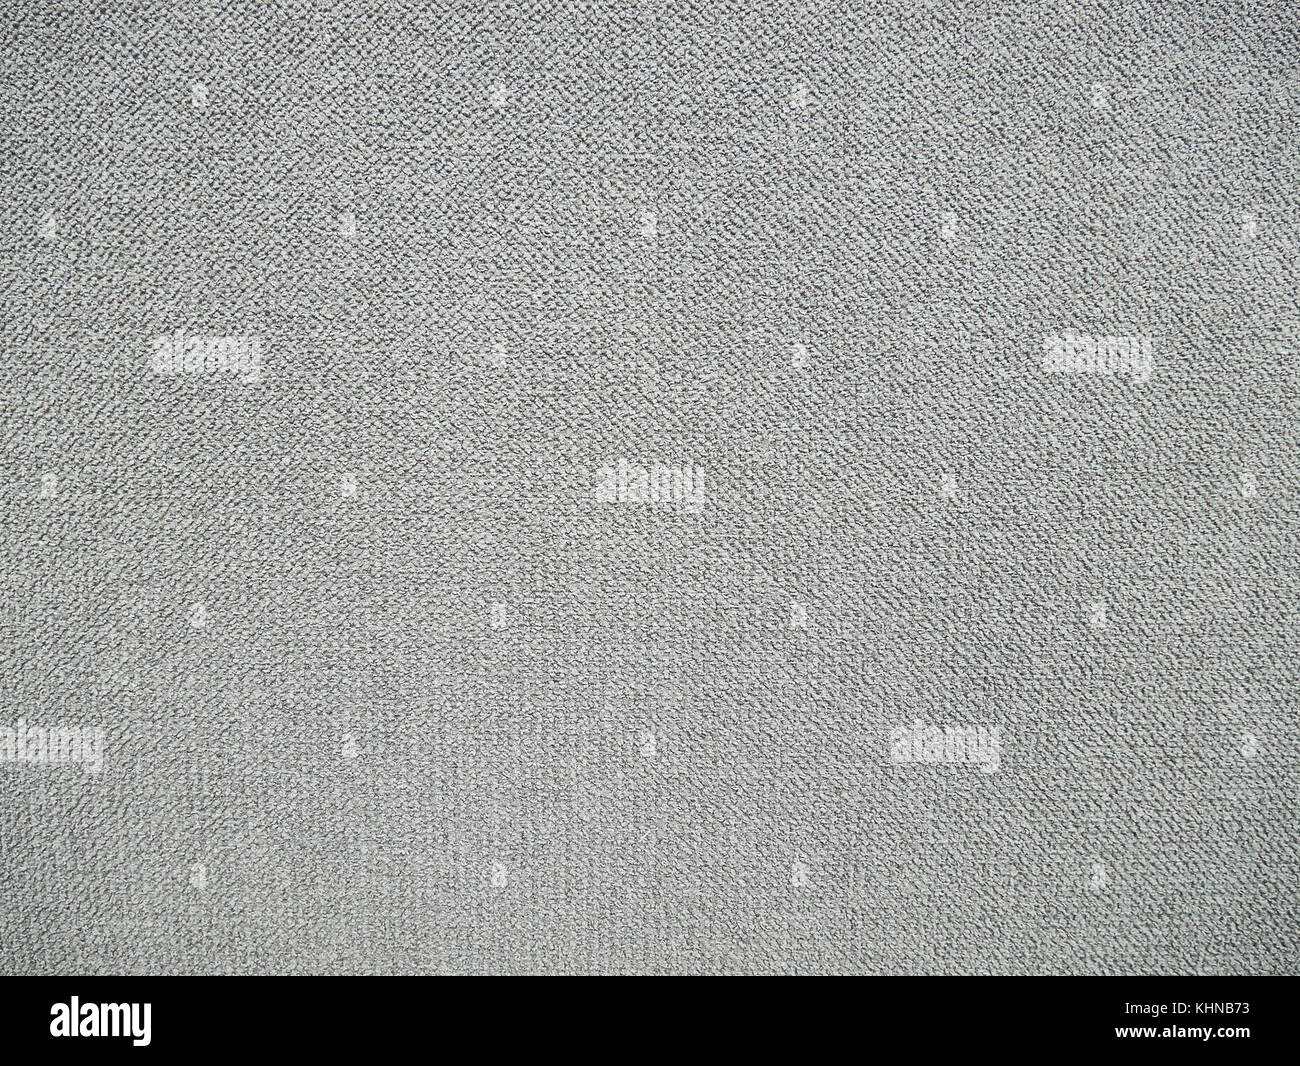 Grey fabric texture Stock Photo - Alamy